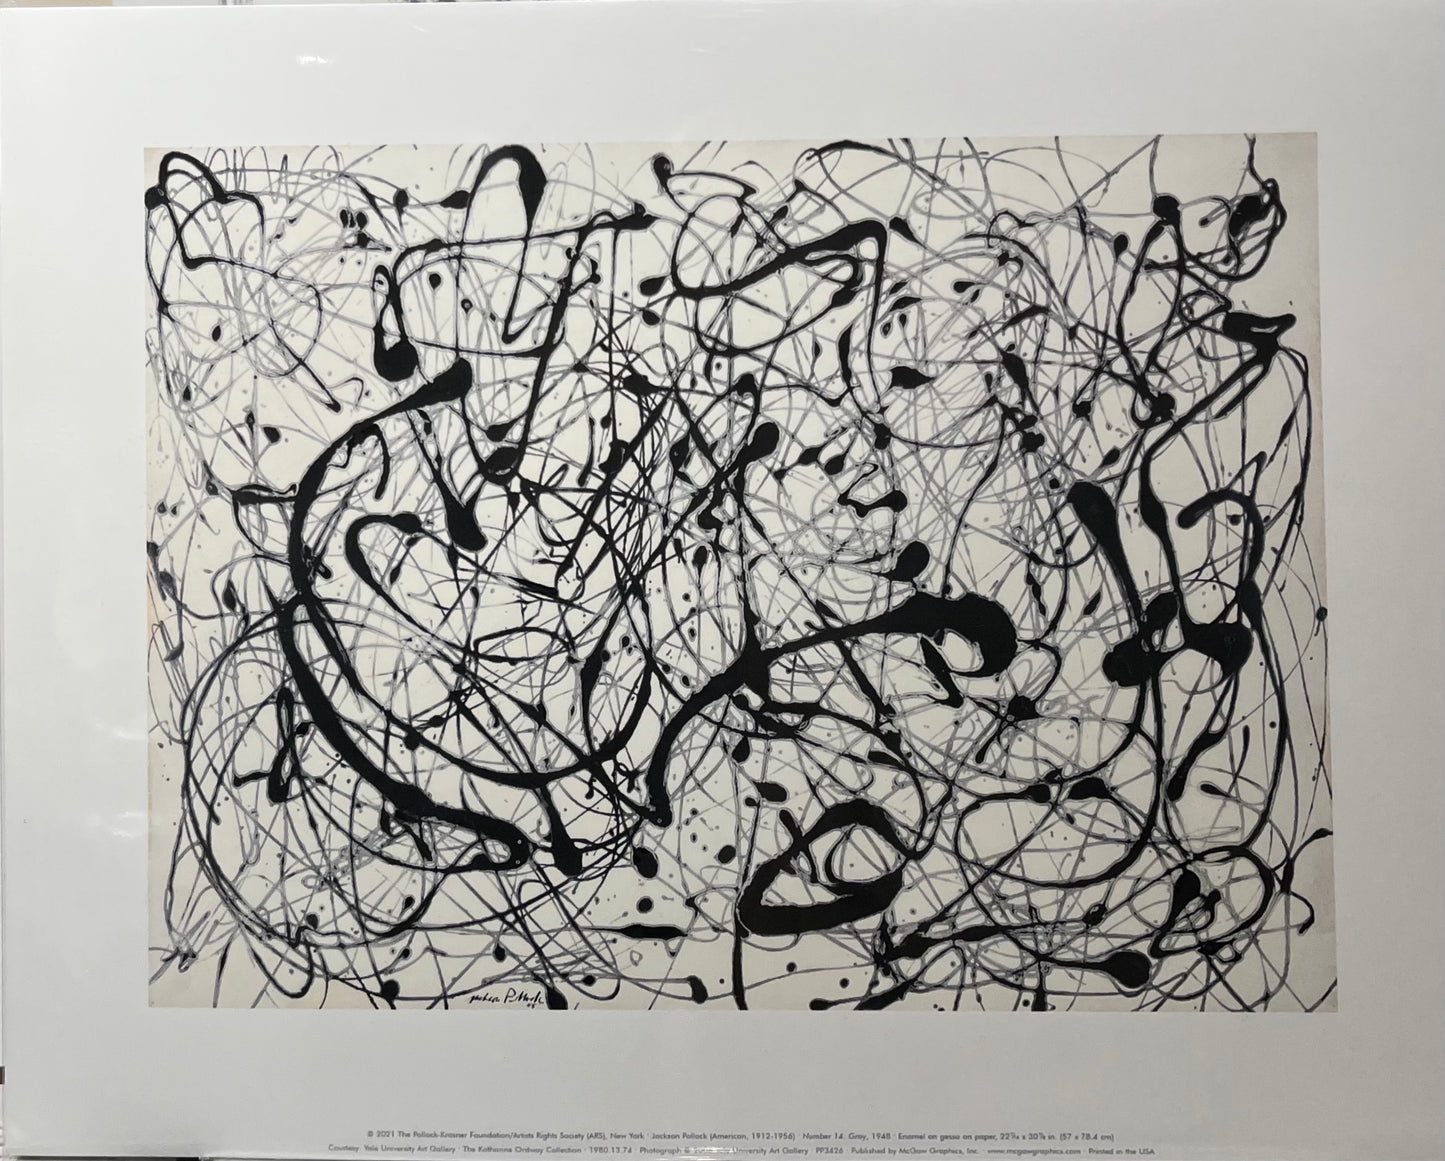 Jackson Pollock, Number 14, Grey, 1948, Offset Lithograph